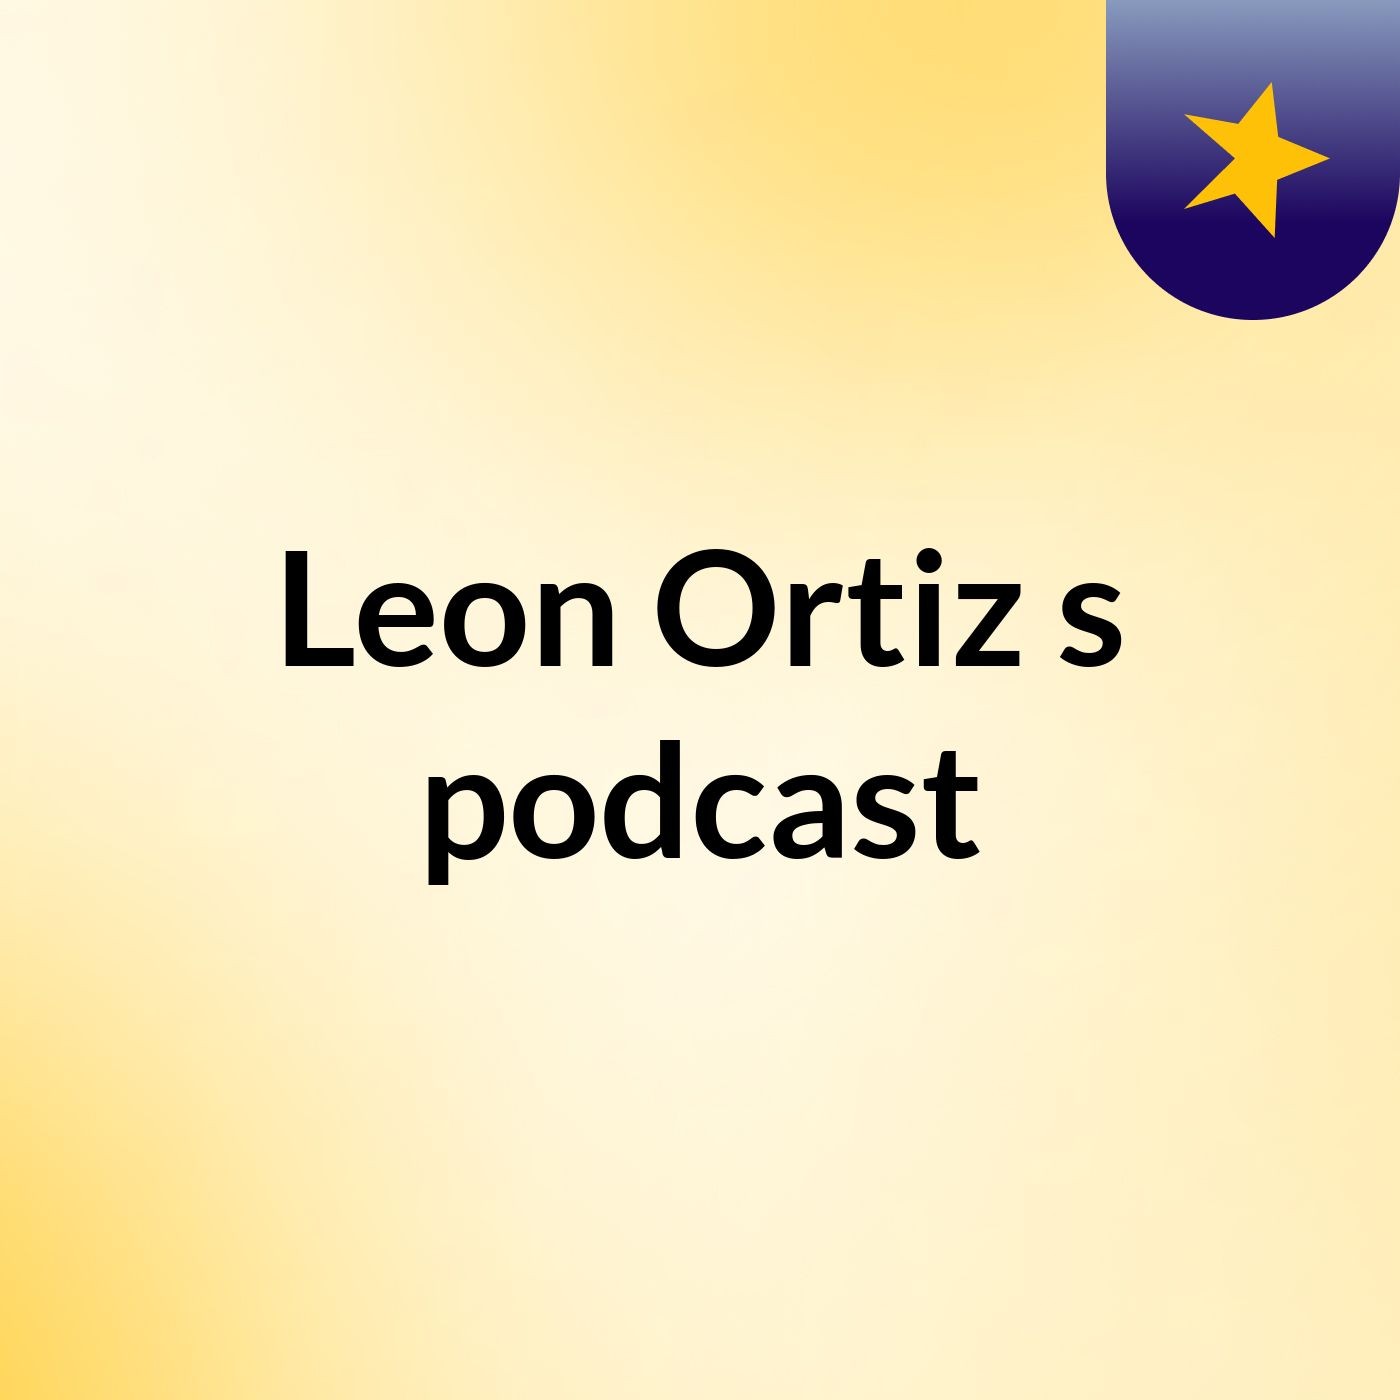 Leon Ortiz's podcast